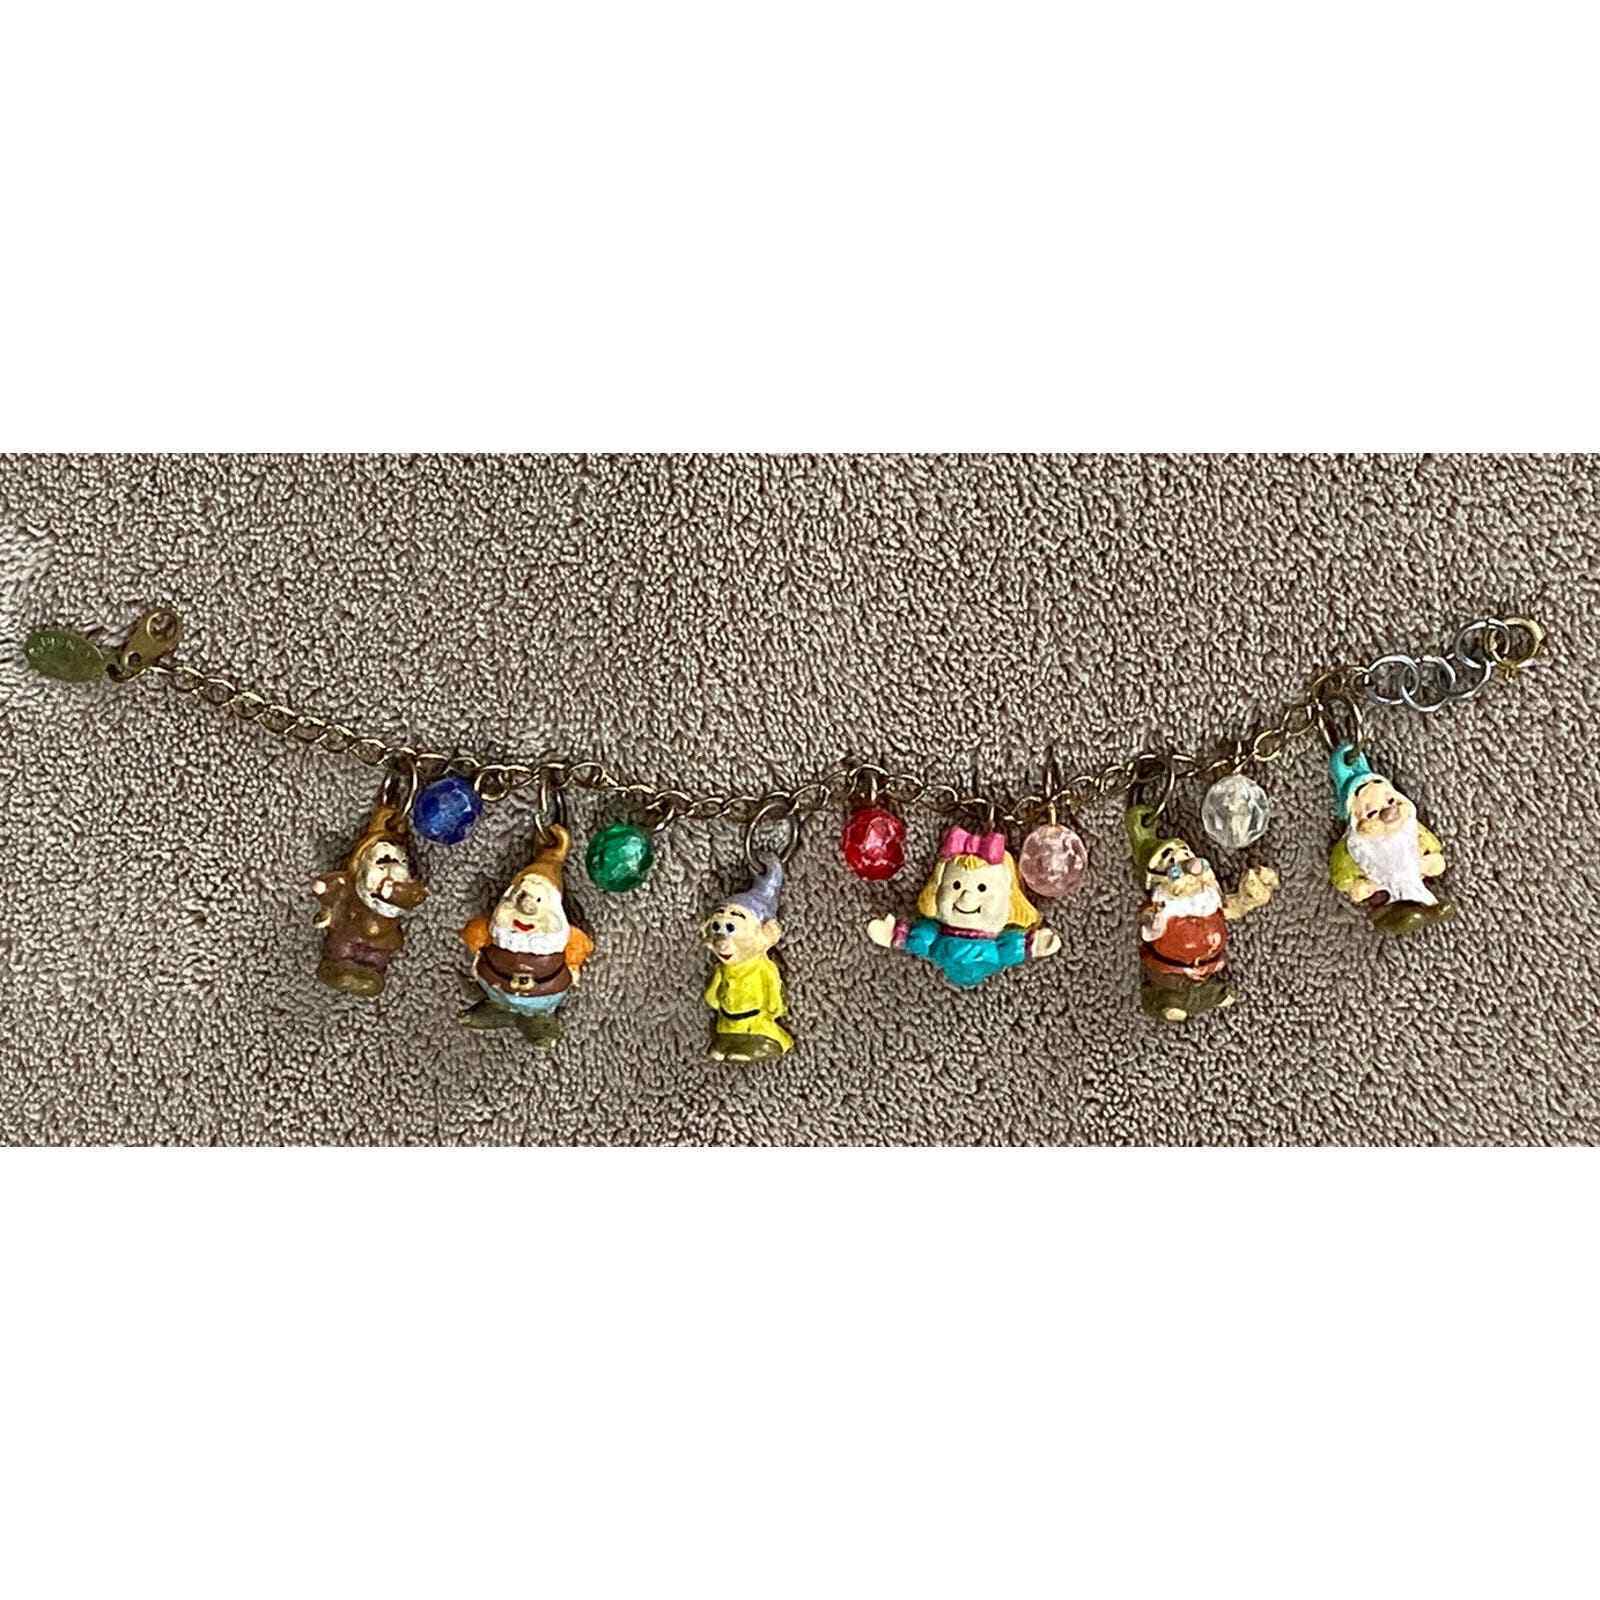 Vintage 1980s Disney Snow White Dwarfs Resin Charm Bracelet Applause Antique